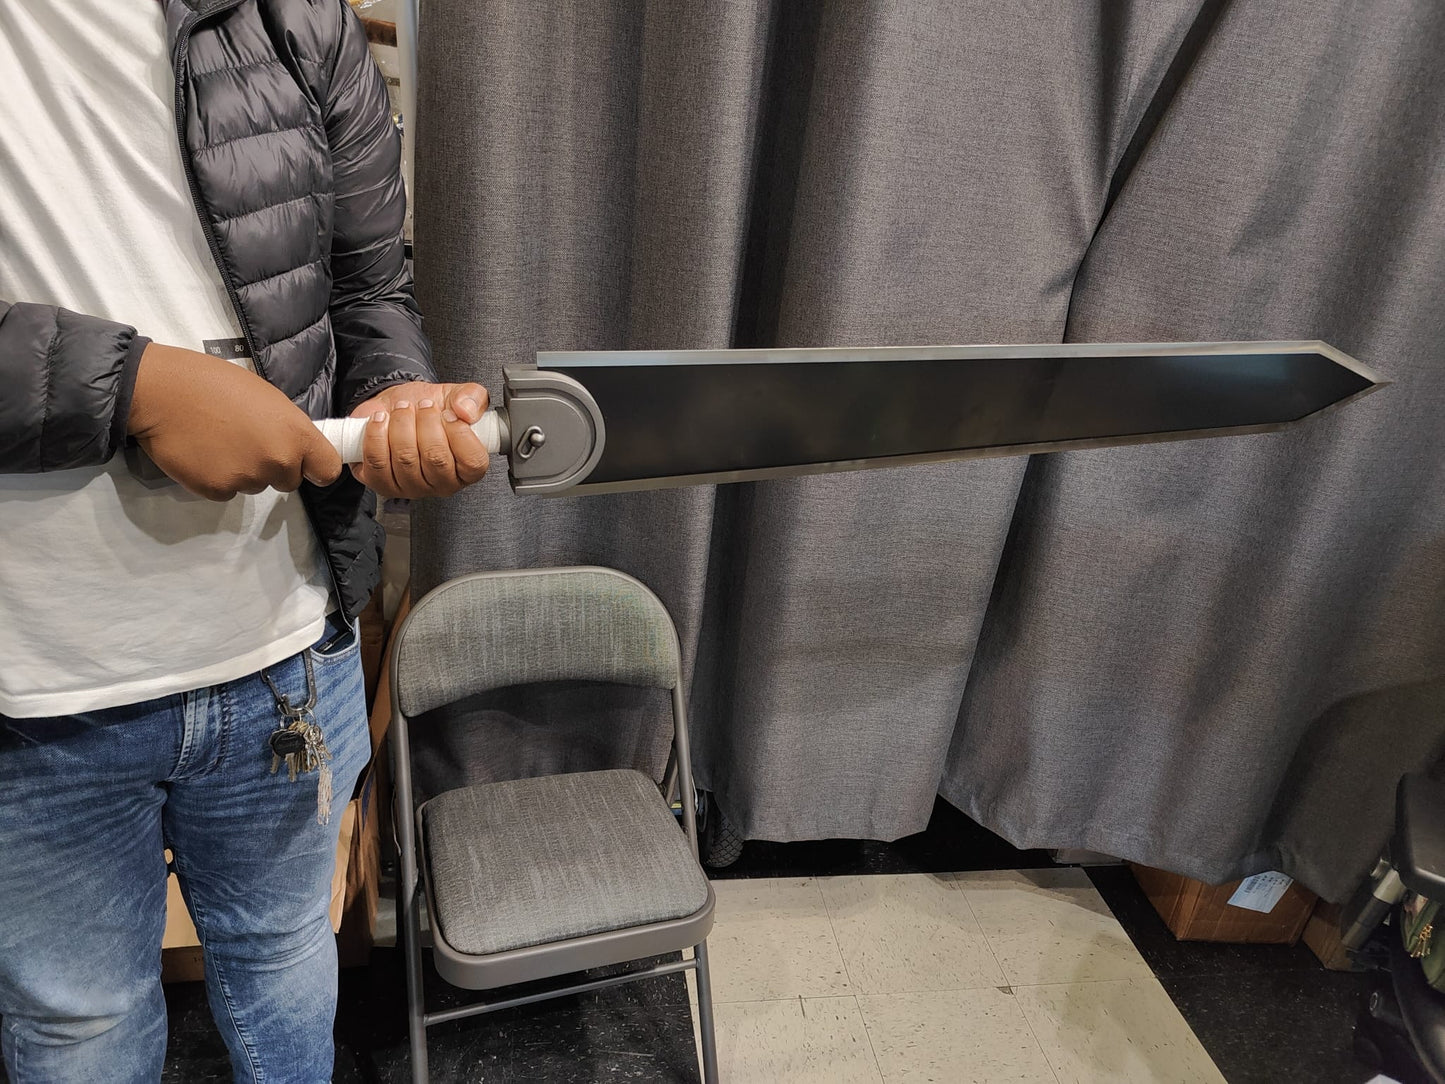 Berserk Metal Sword (Price Does Not Include Shipping)